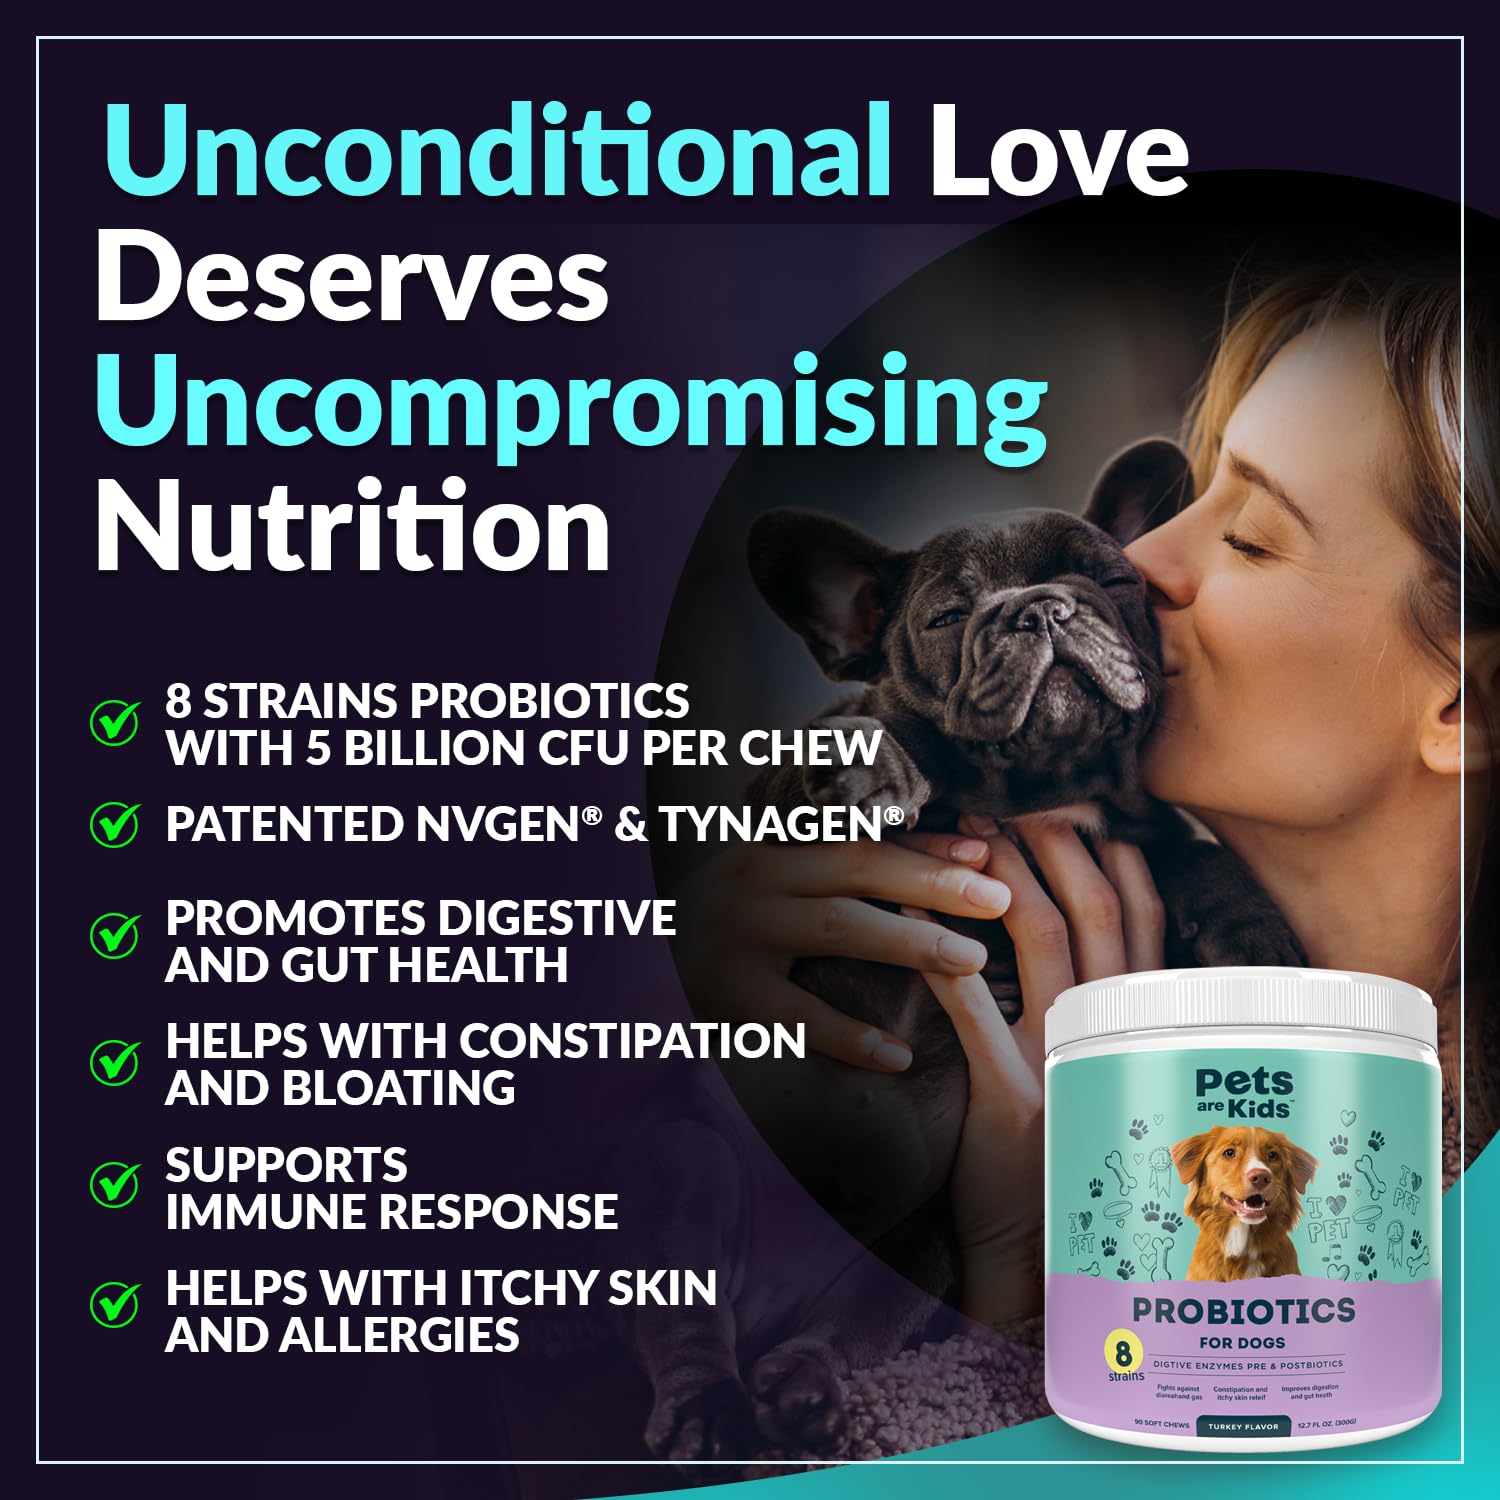 Unconditional love deserves uncompromising nutrition